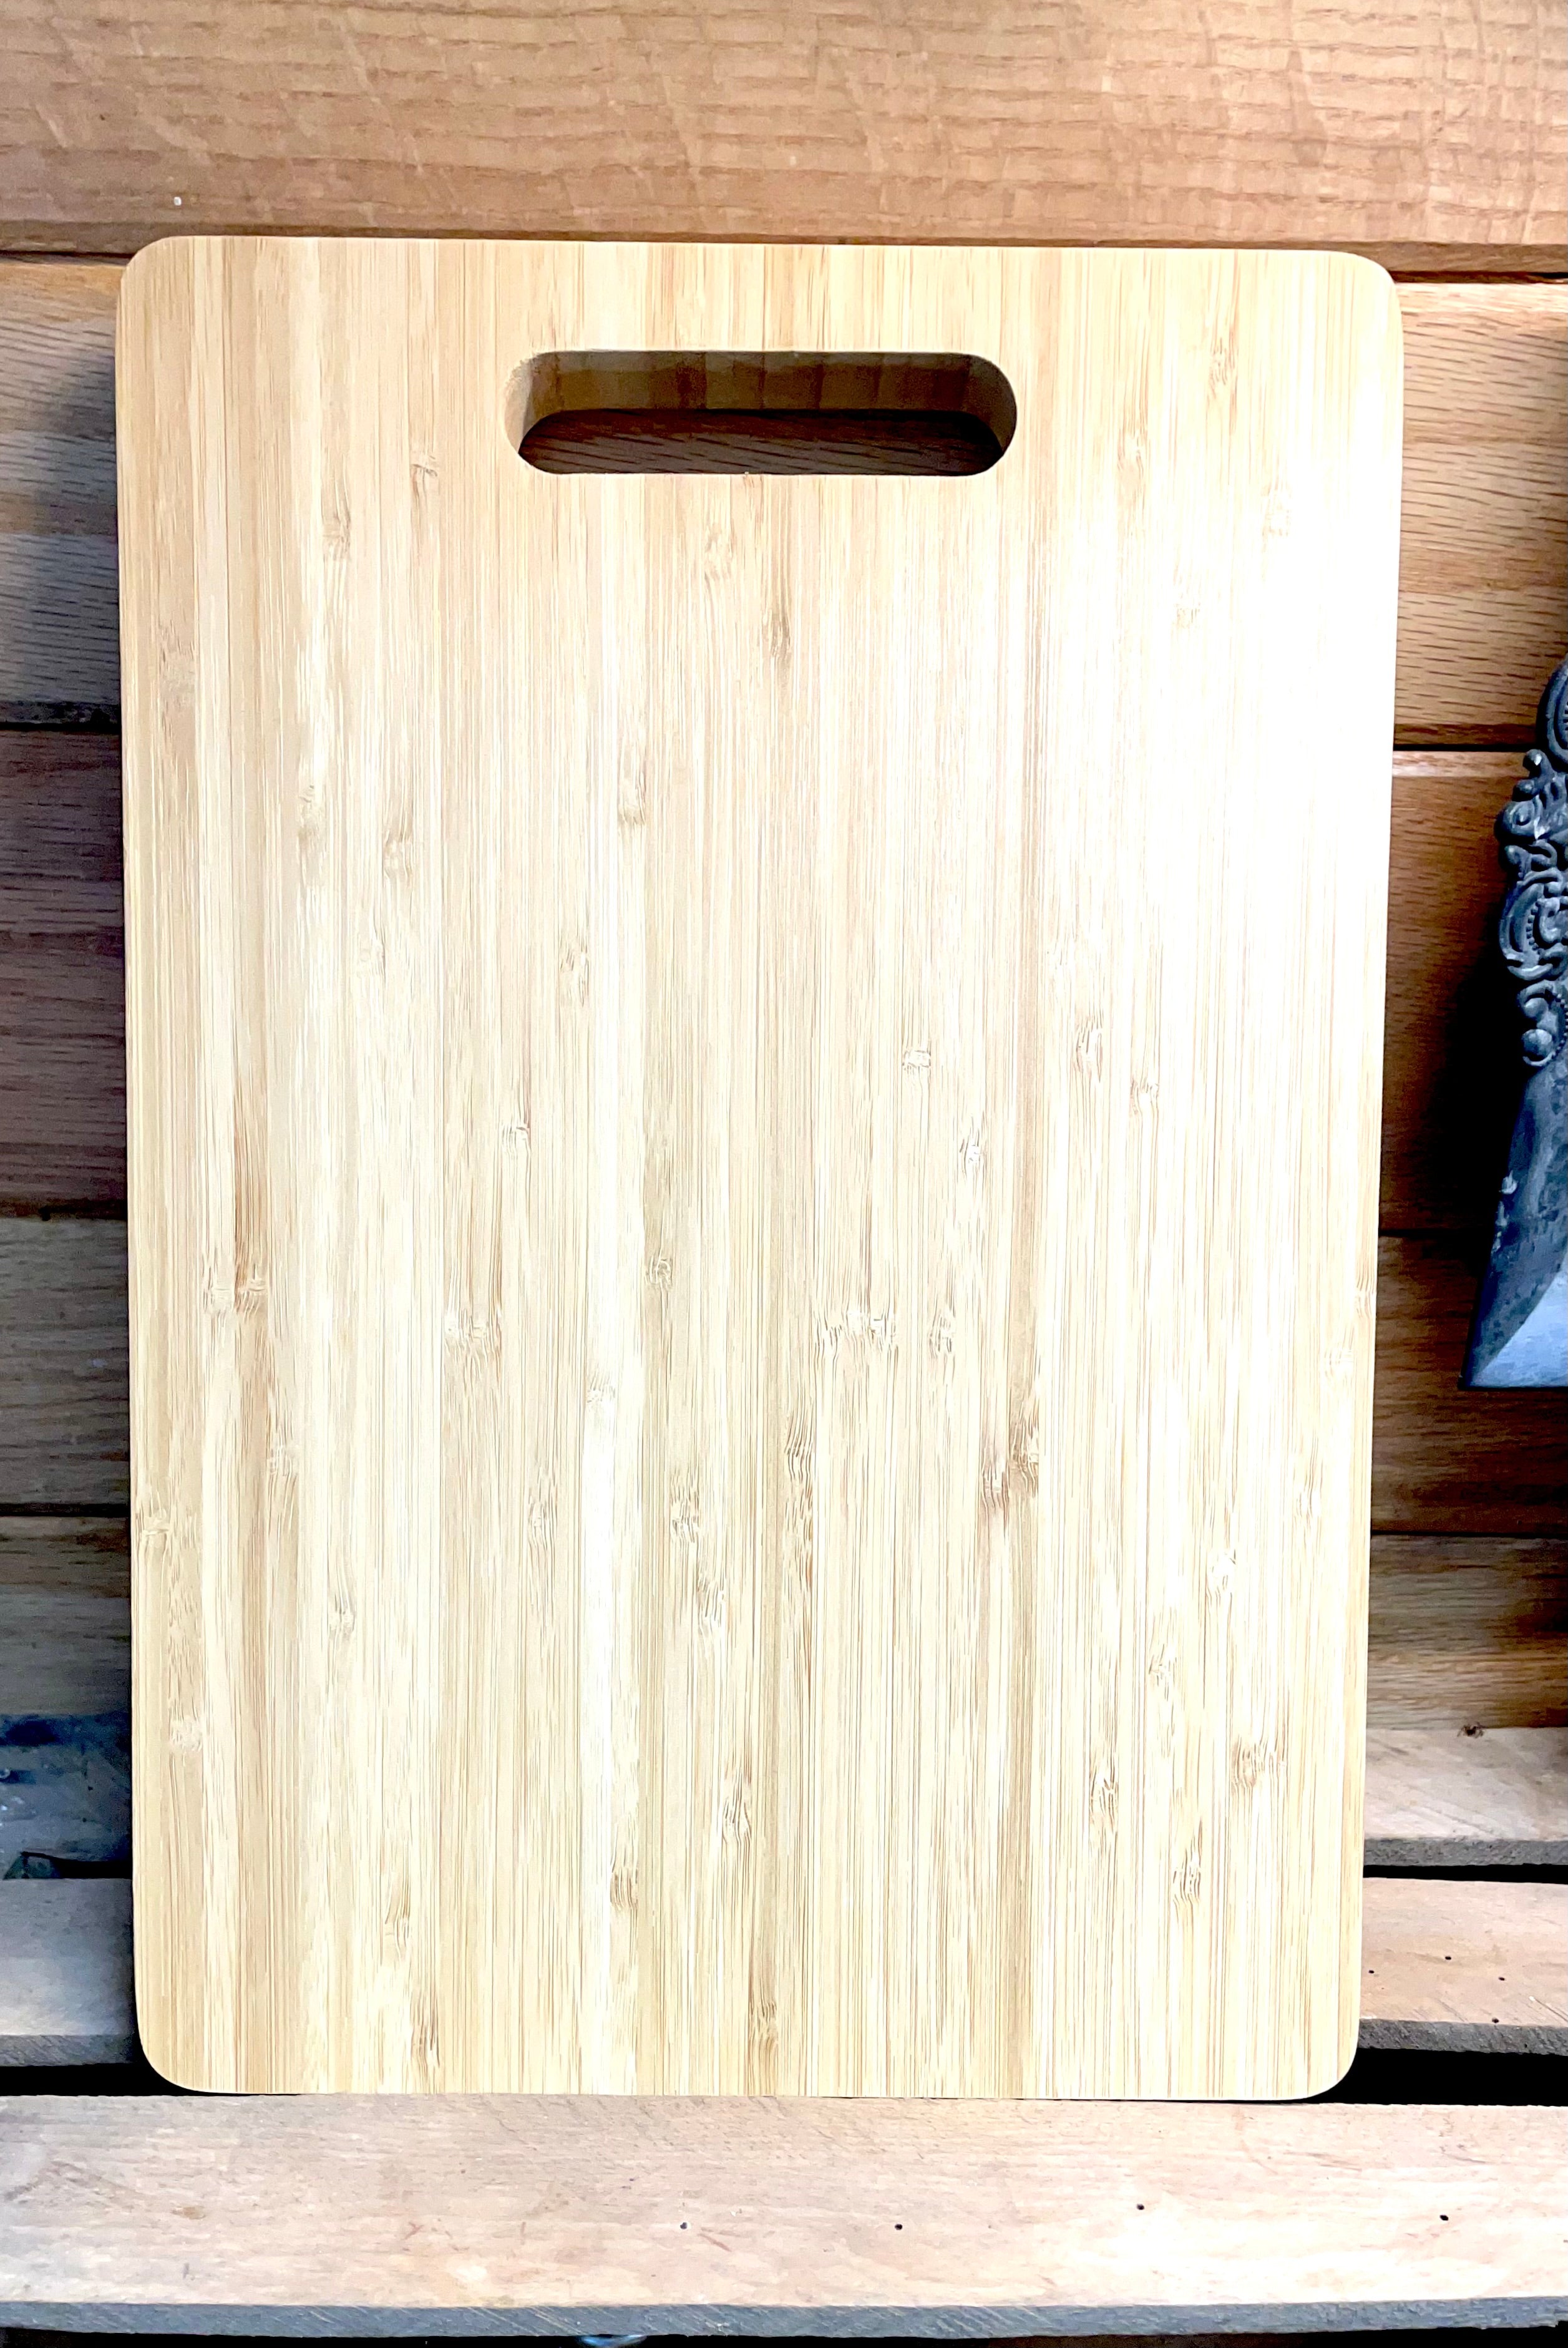 Ginsu Eco-Friendly Bamboo Cutting Board - Bed Bath & Beyond - 35255592